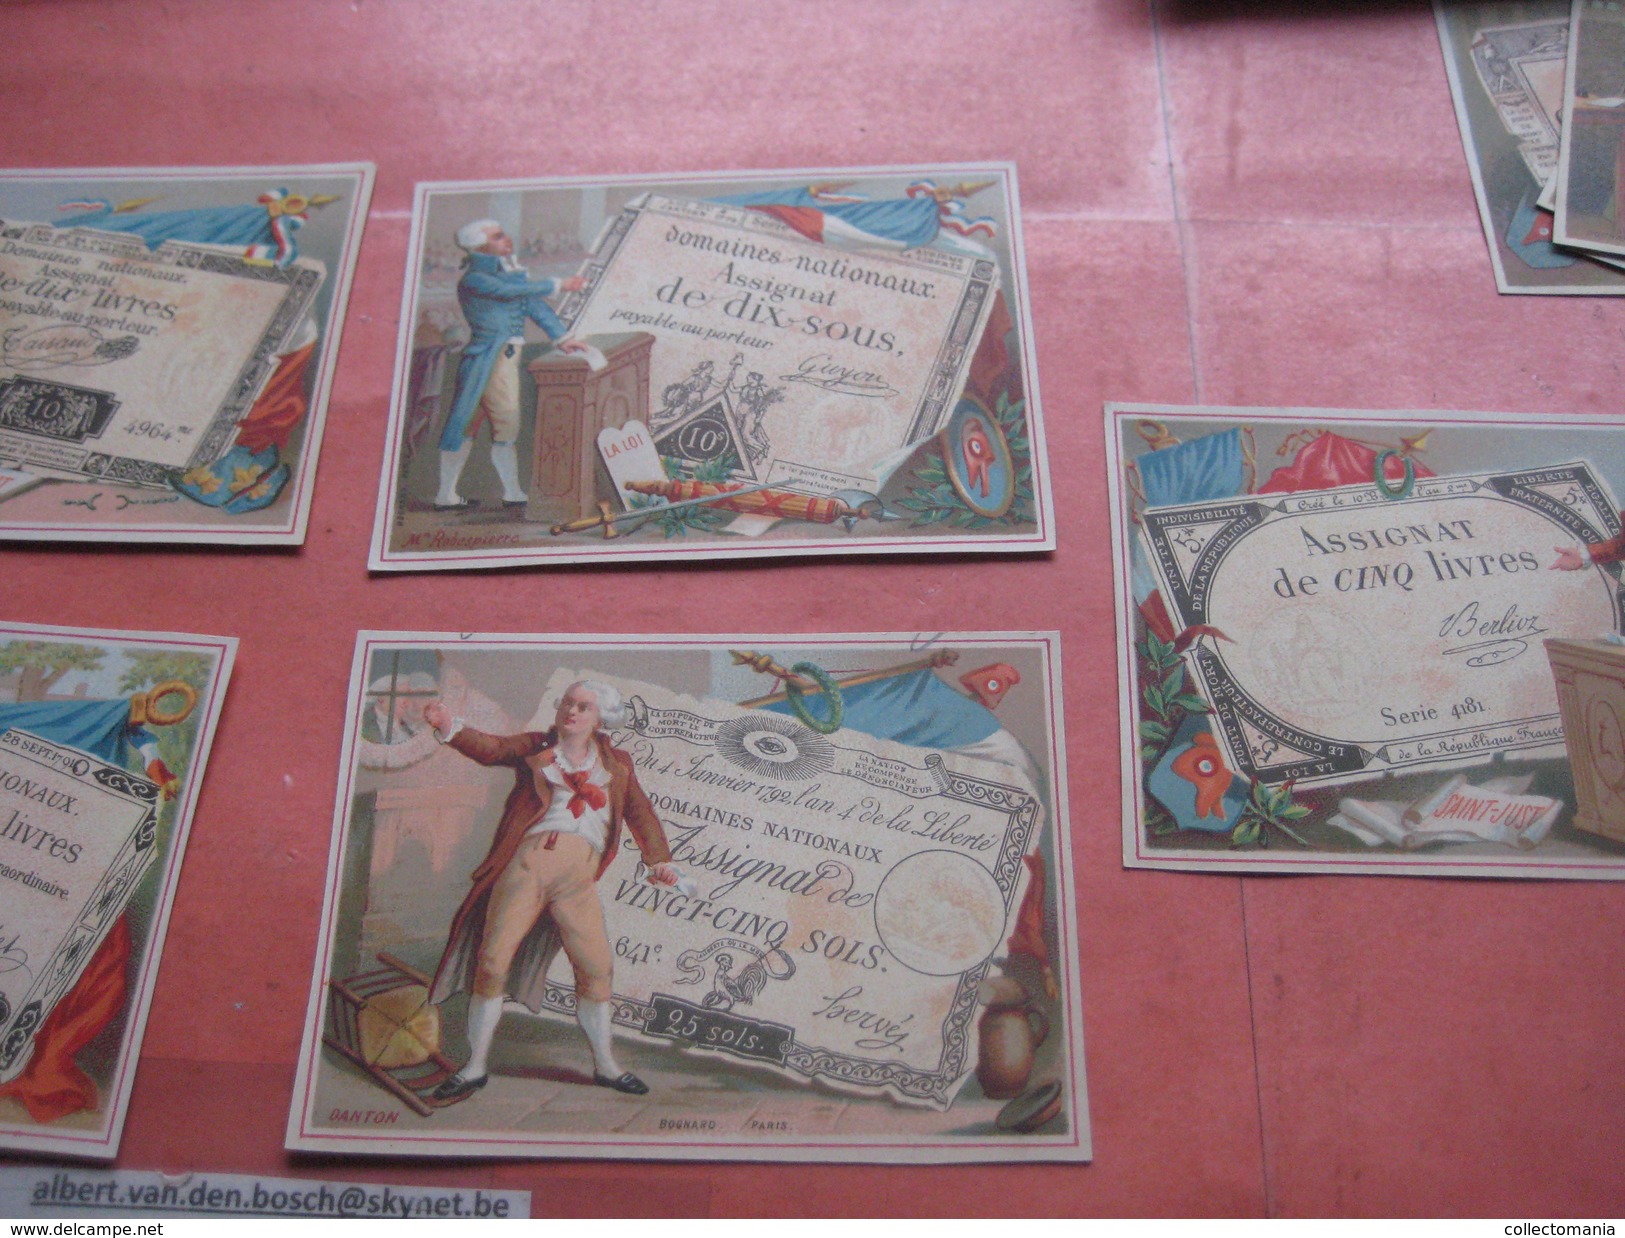 12 Cards litho c1900 Bognard - 6 red bordered (no Pub) & et 6 cards no border (pub) - ASSIGNATS money banknotes